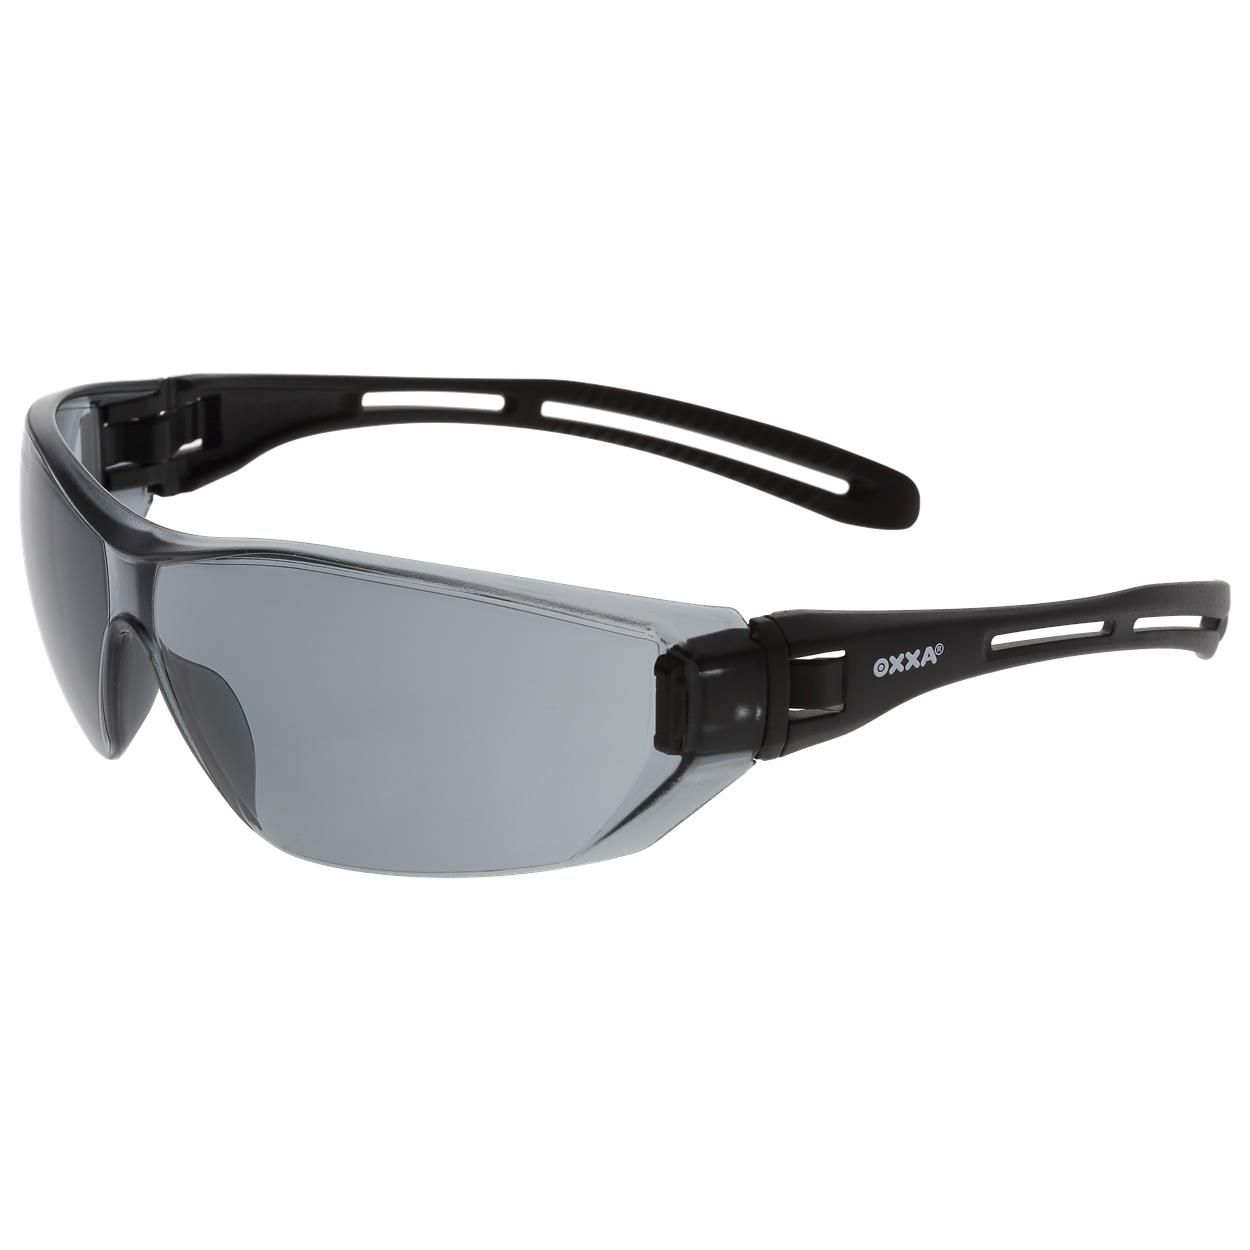 OXXA Nila 8216 veiligheidsbril